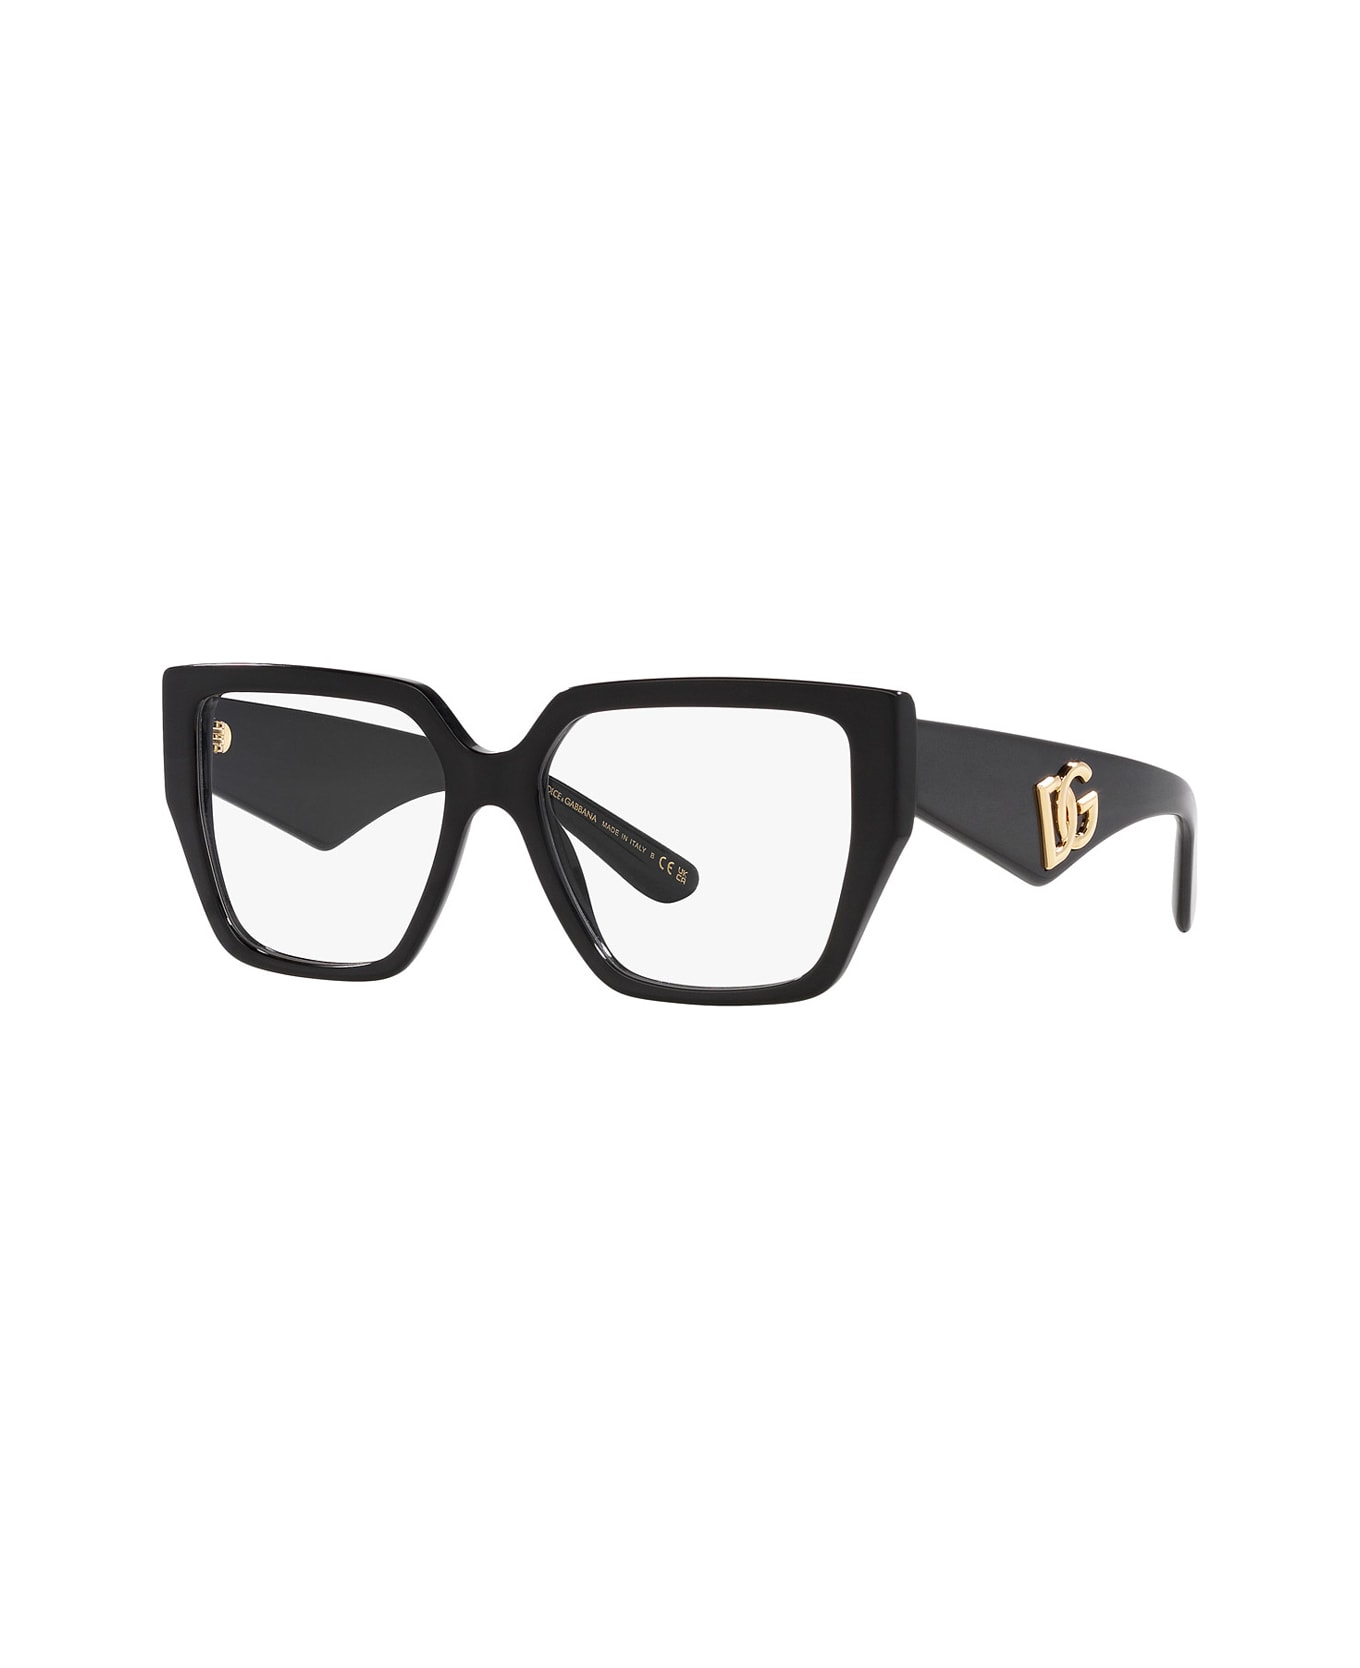 Dolce & Gabbana Eyewear Dg3373 501 Glasses - Nero